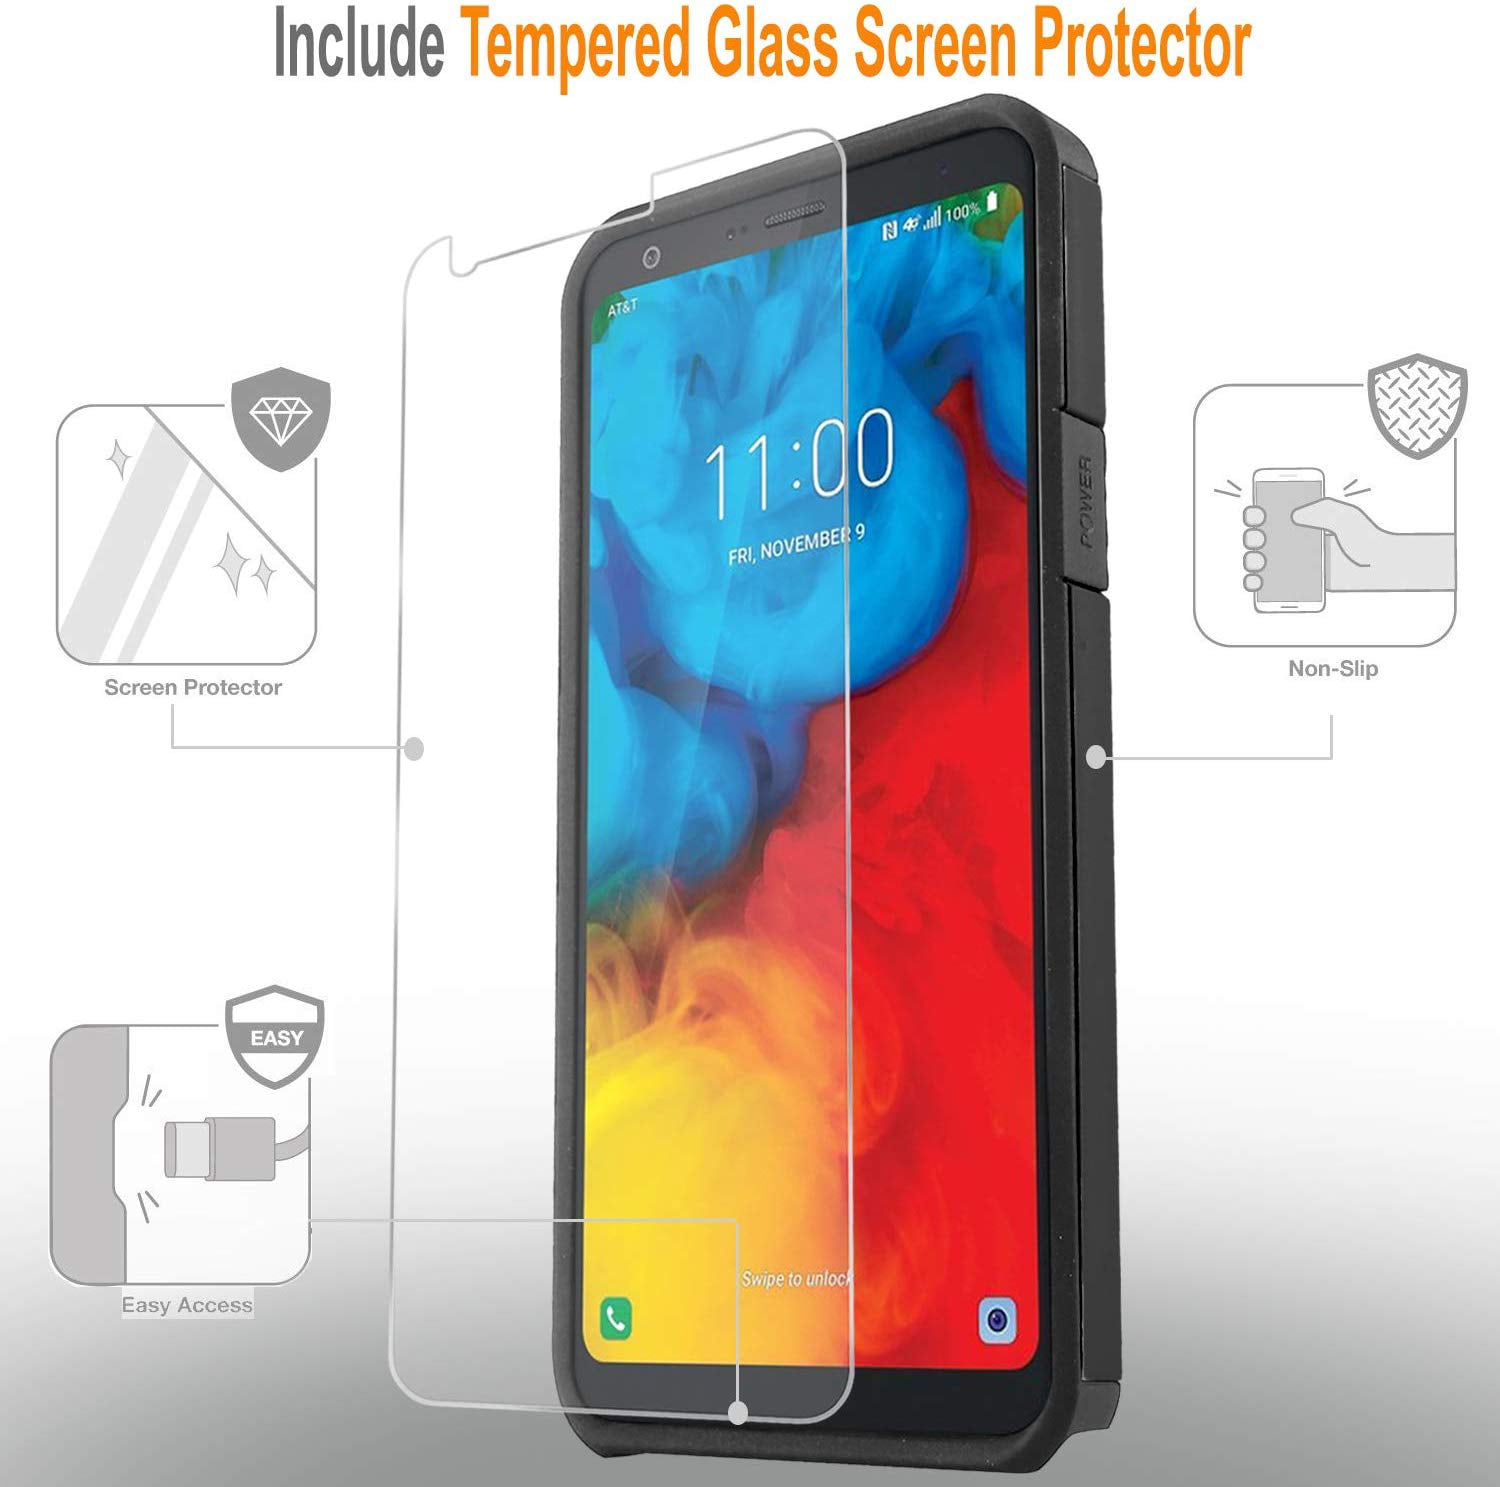 Temperedglass Screen Protector Guard Shield Saver Armor Cover for Google Pixel 2 